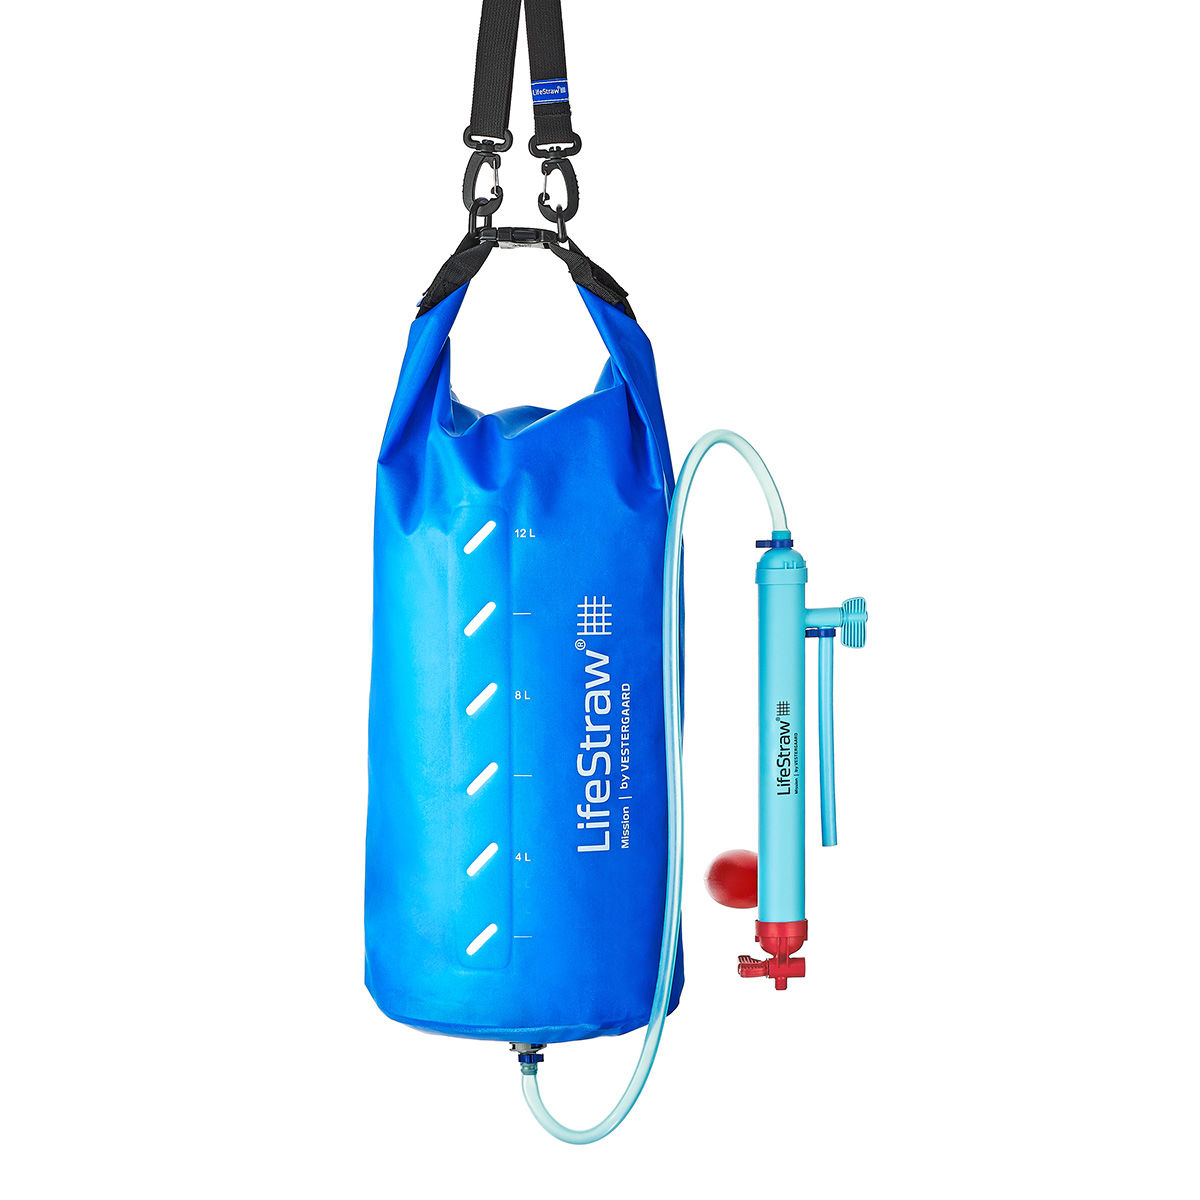 LifeStraw Mission 12 L - Filtro de agua por gravedad